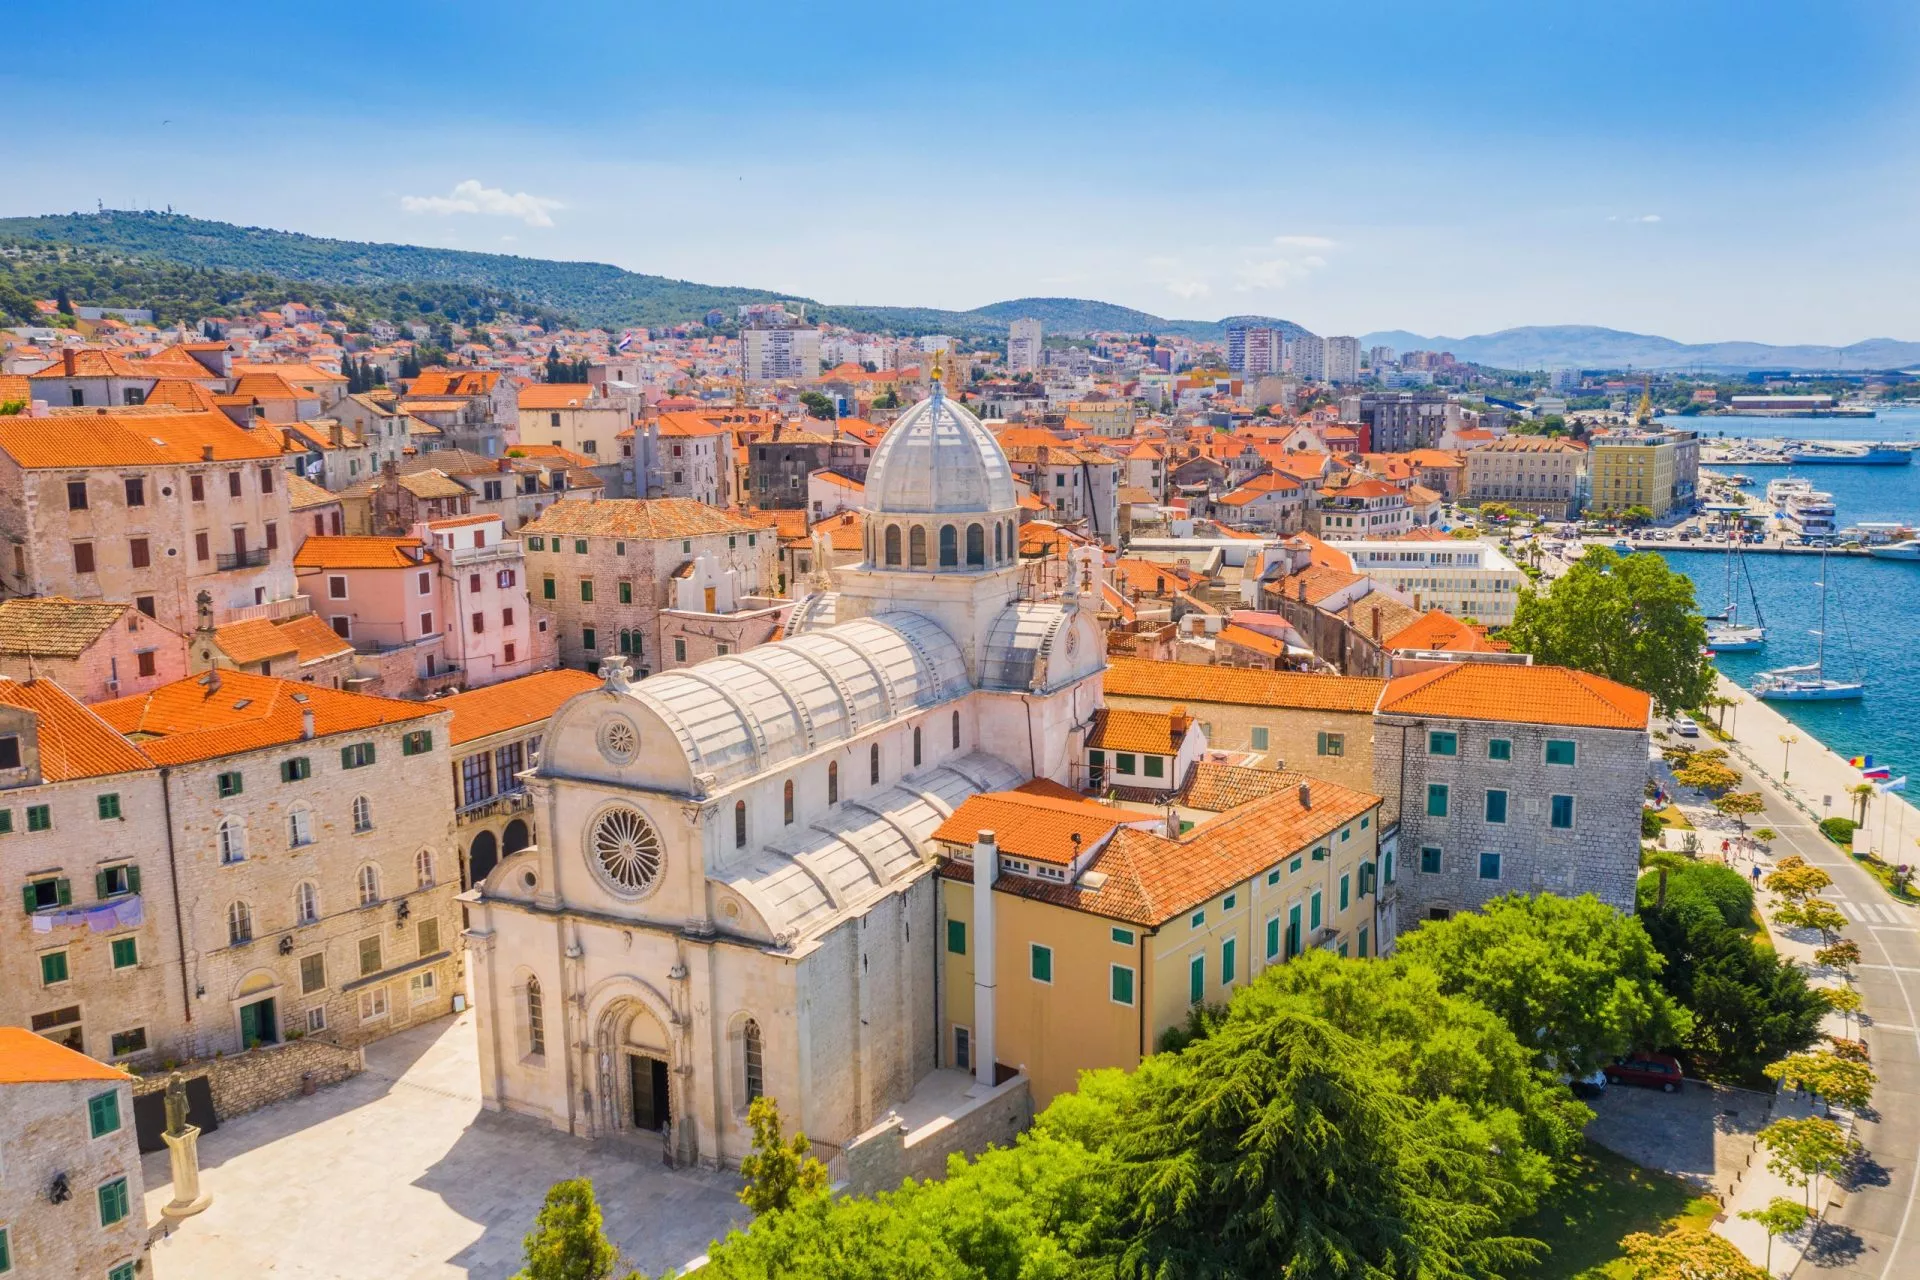 Kroatien, Stadt Sibenik, Panoramablick auf die Altstadt und die Kathedrale des Heiligen Jakobus, wichtigstes architektonisches Denkmal der Renaissance in Kroatien, UNESCO-Weltkulturerbe